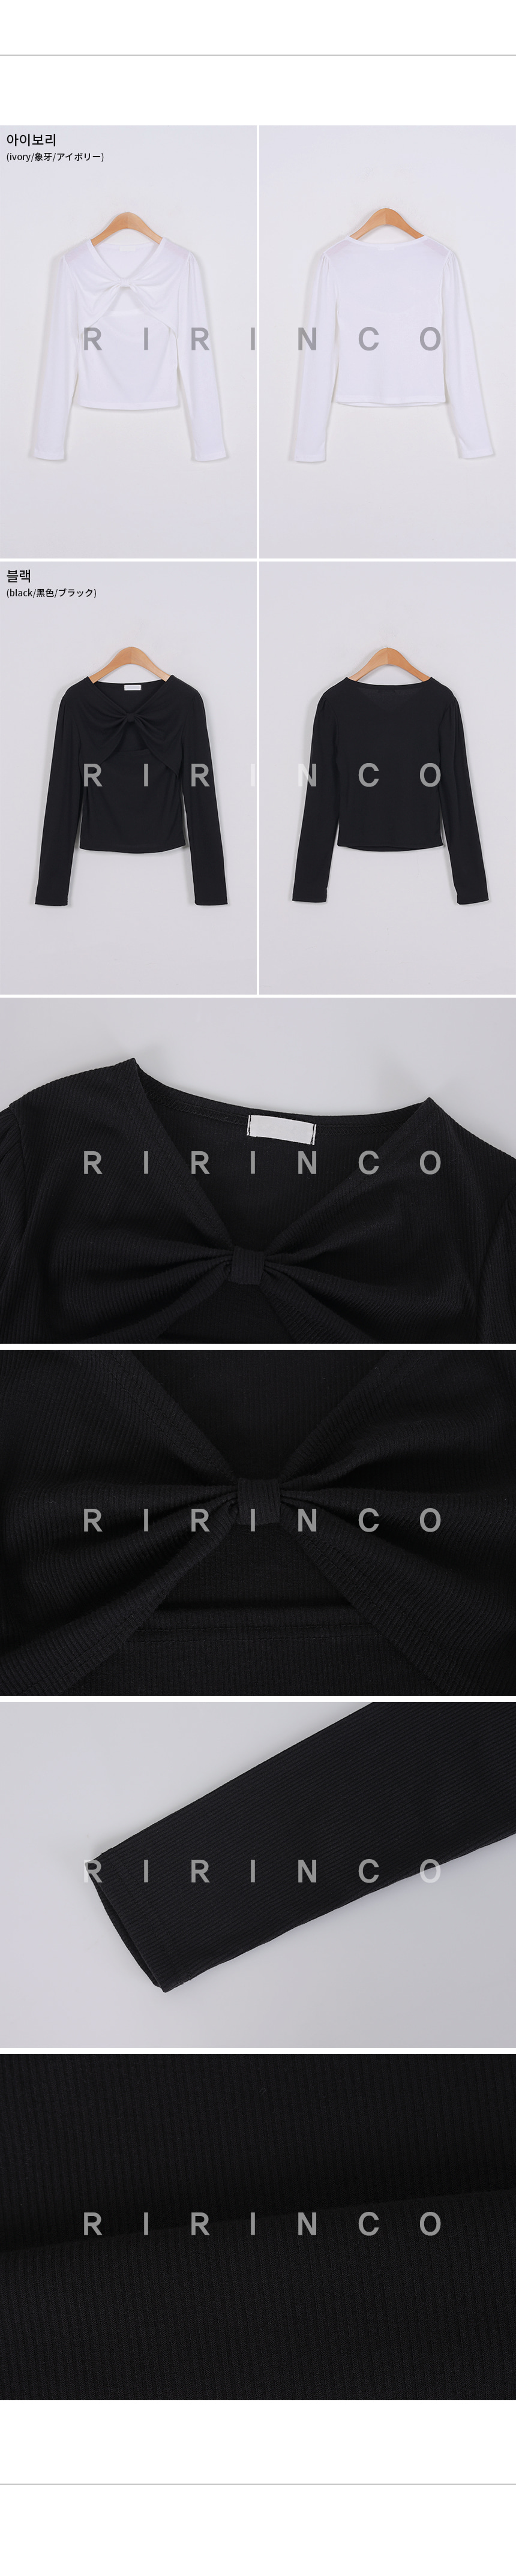 RIRINCO リボンボレロロングスリーブTシャツ